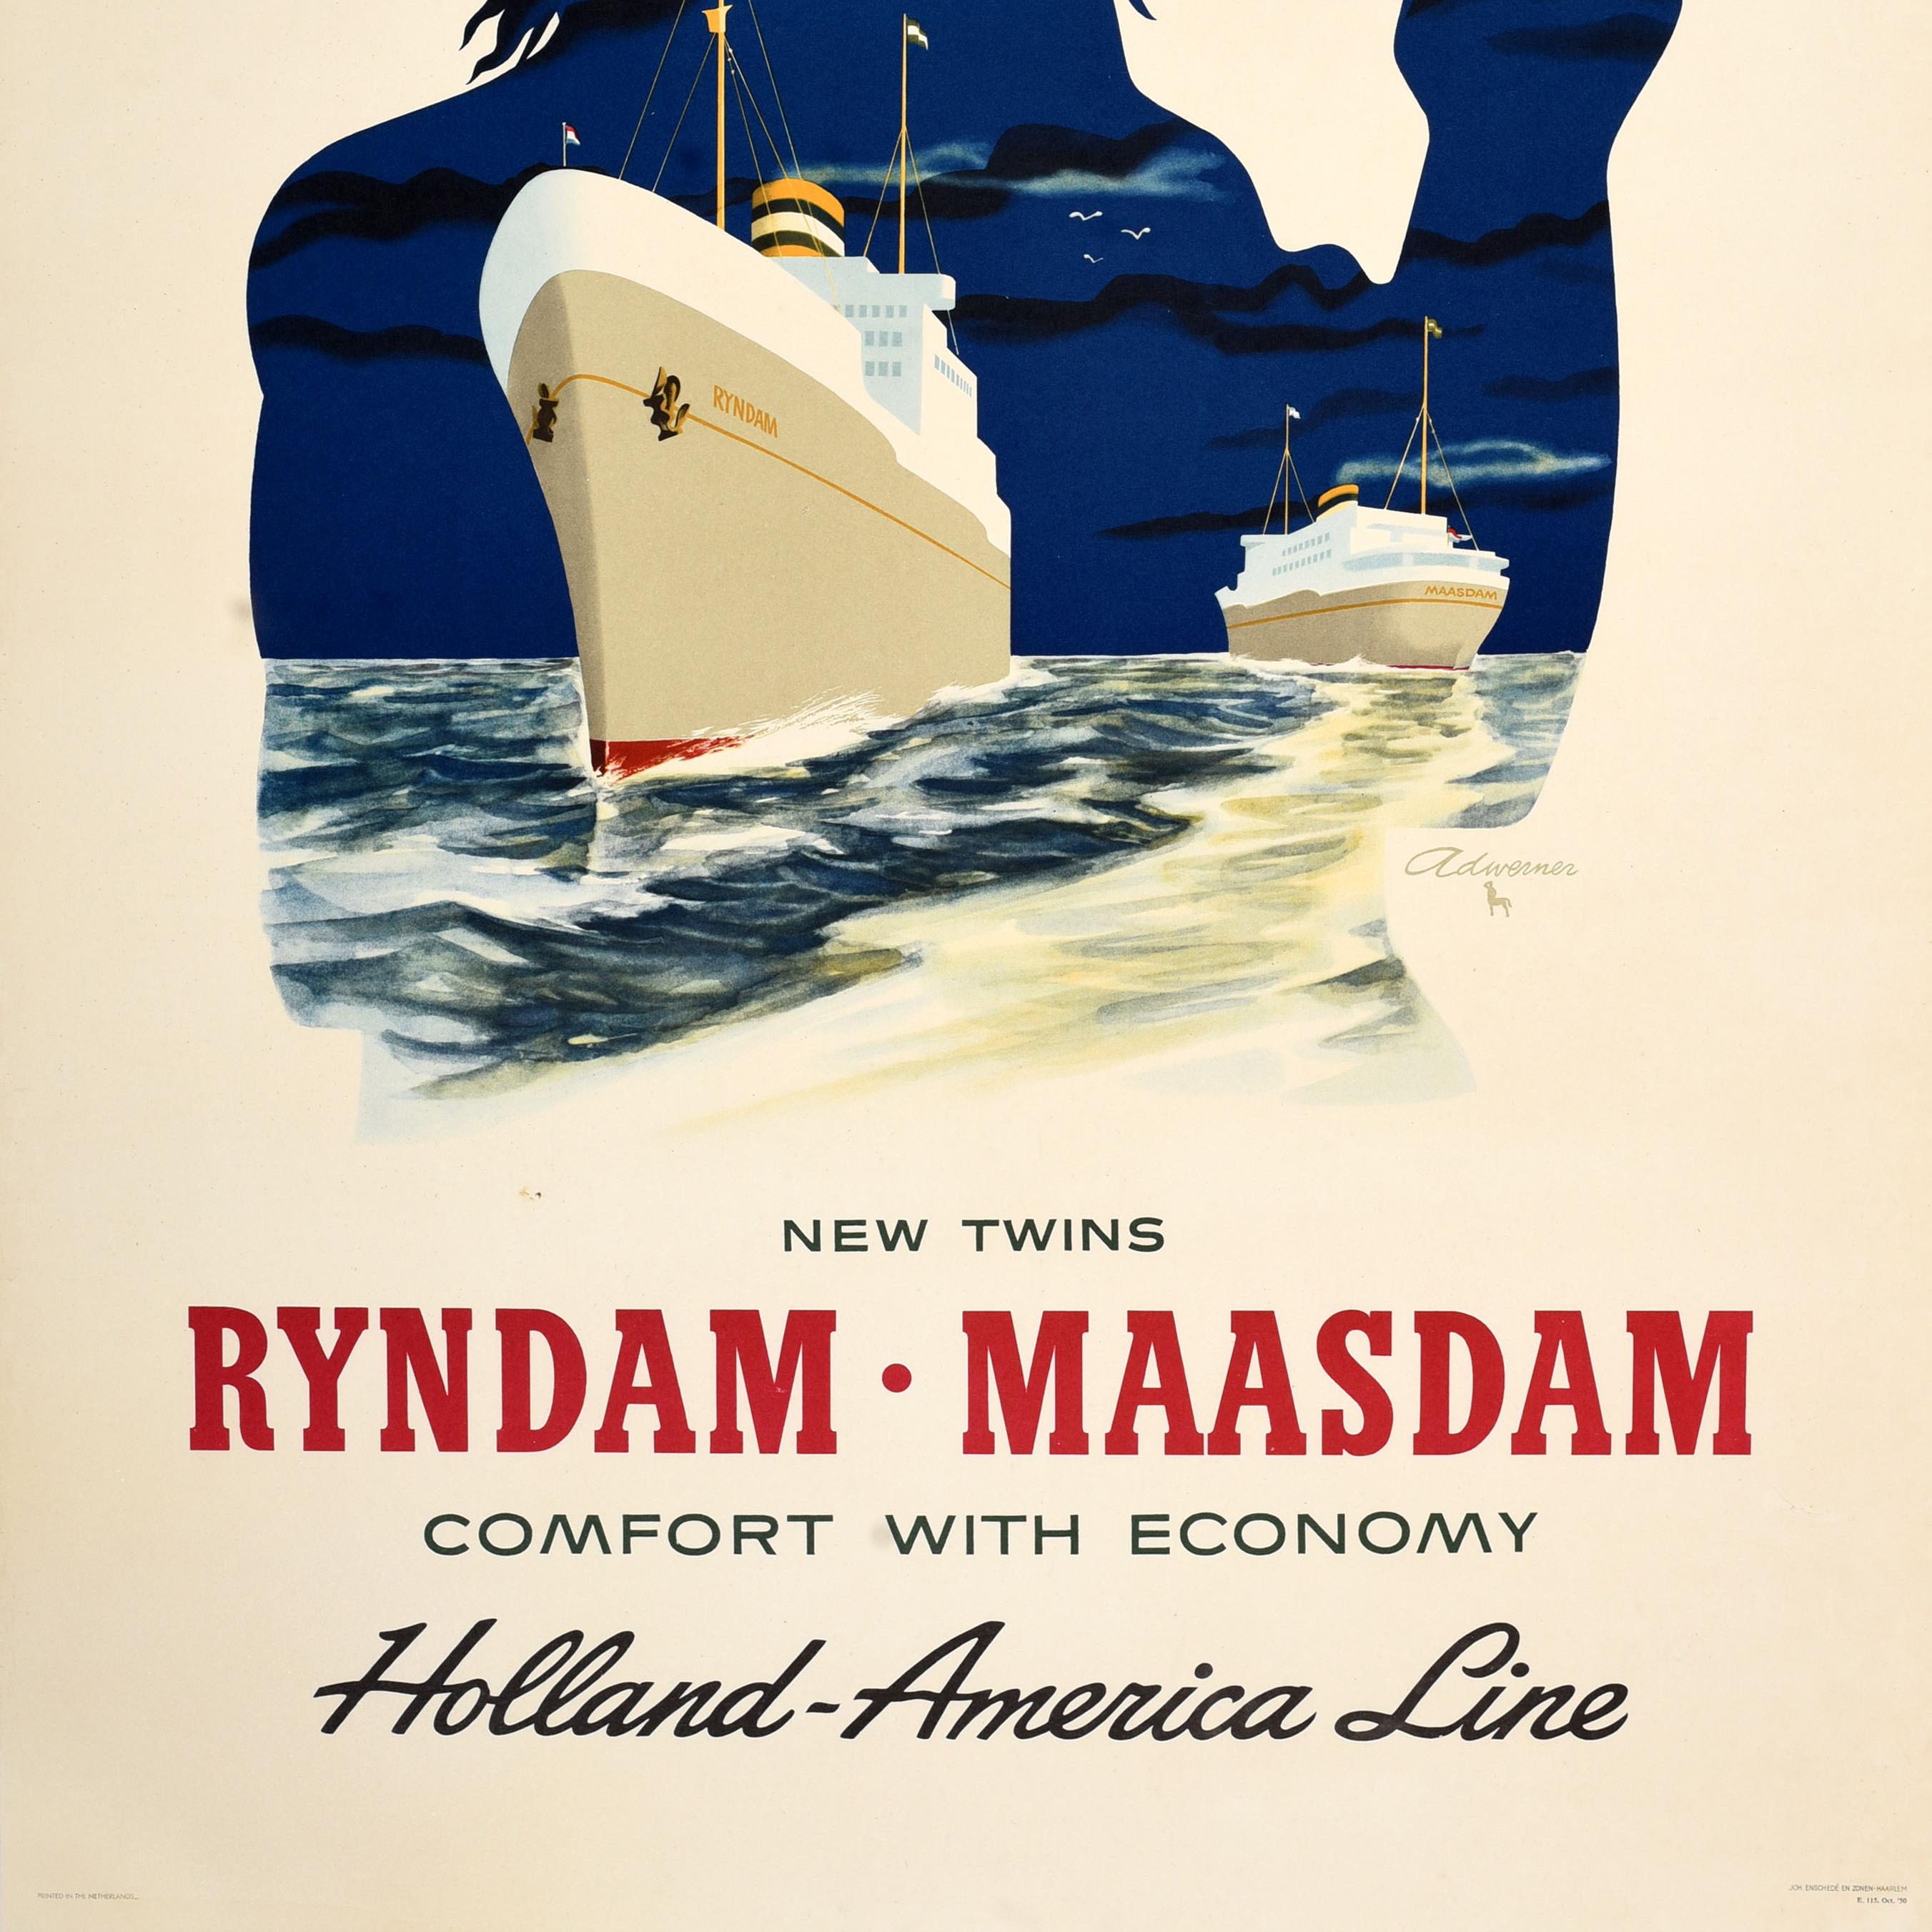 Original Vintage Travel Poster Ryndam Maasdam Holland America Line Poseidon Art For Sale 1